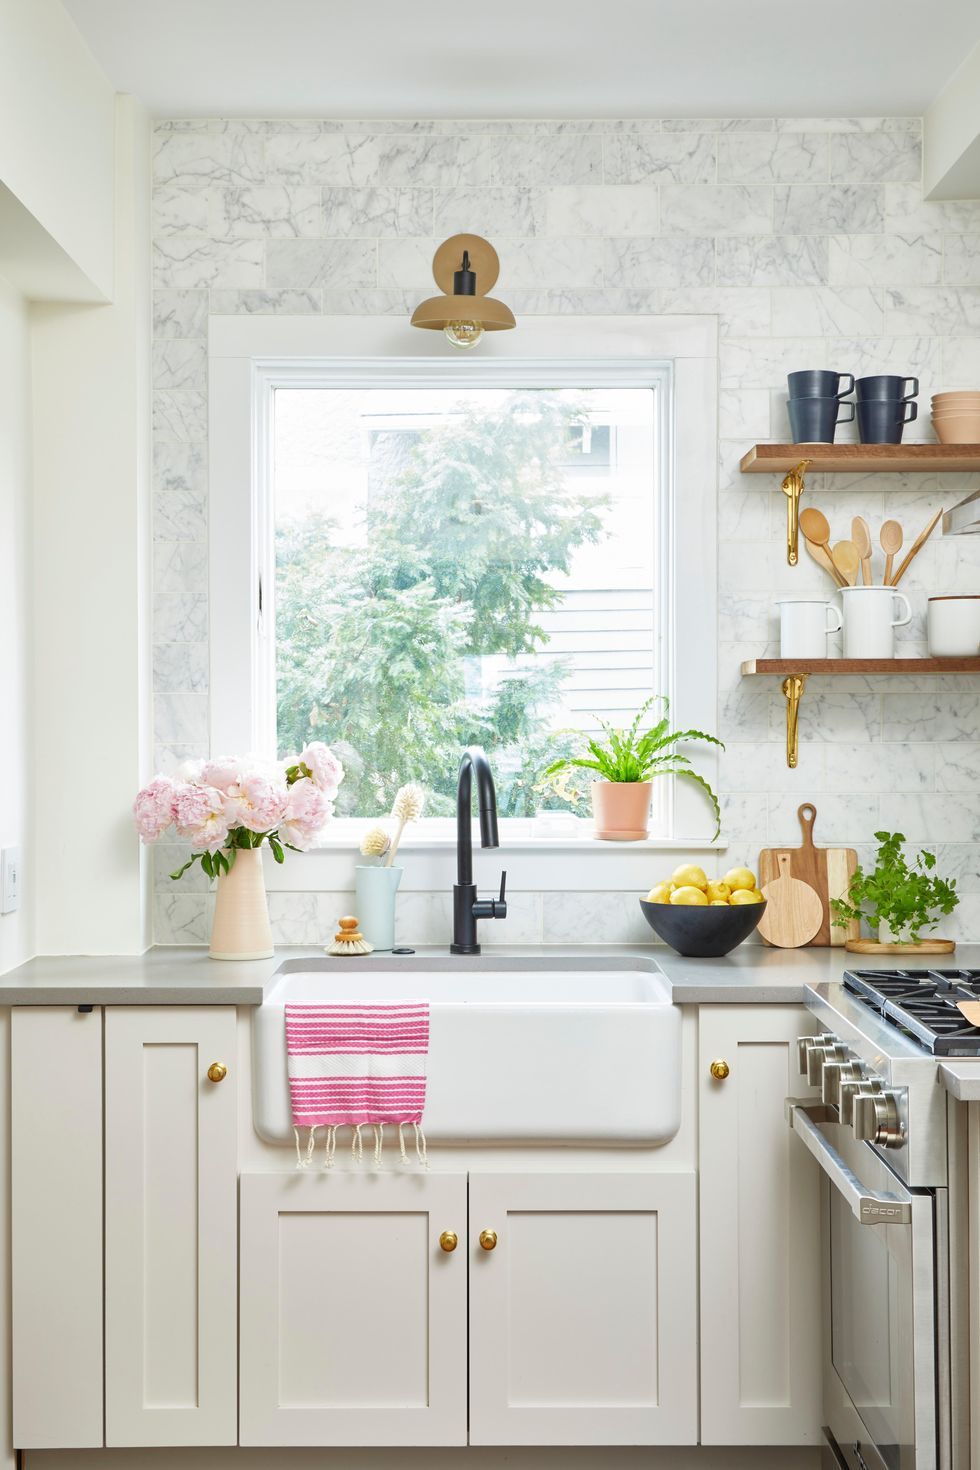 52 Best Small Kitchen Design Ideas, Photos Of Small Kitchen Ideas